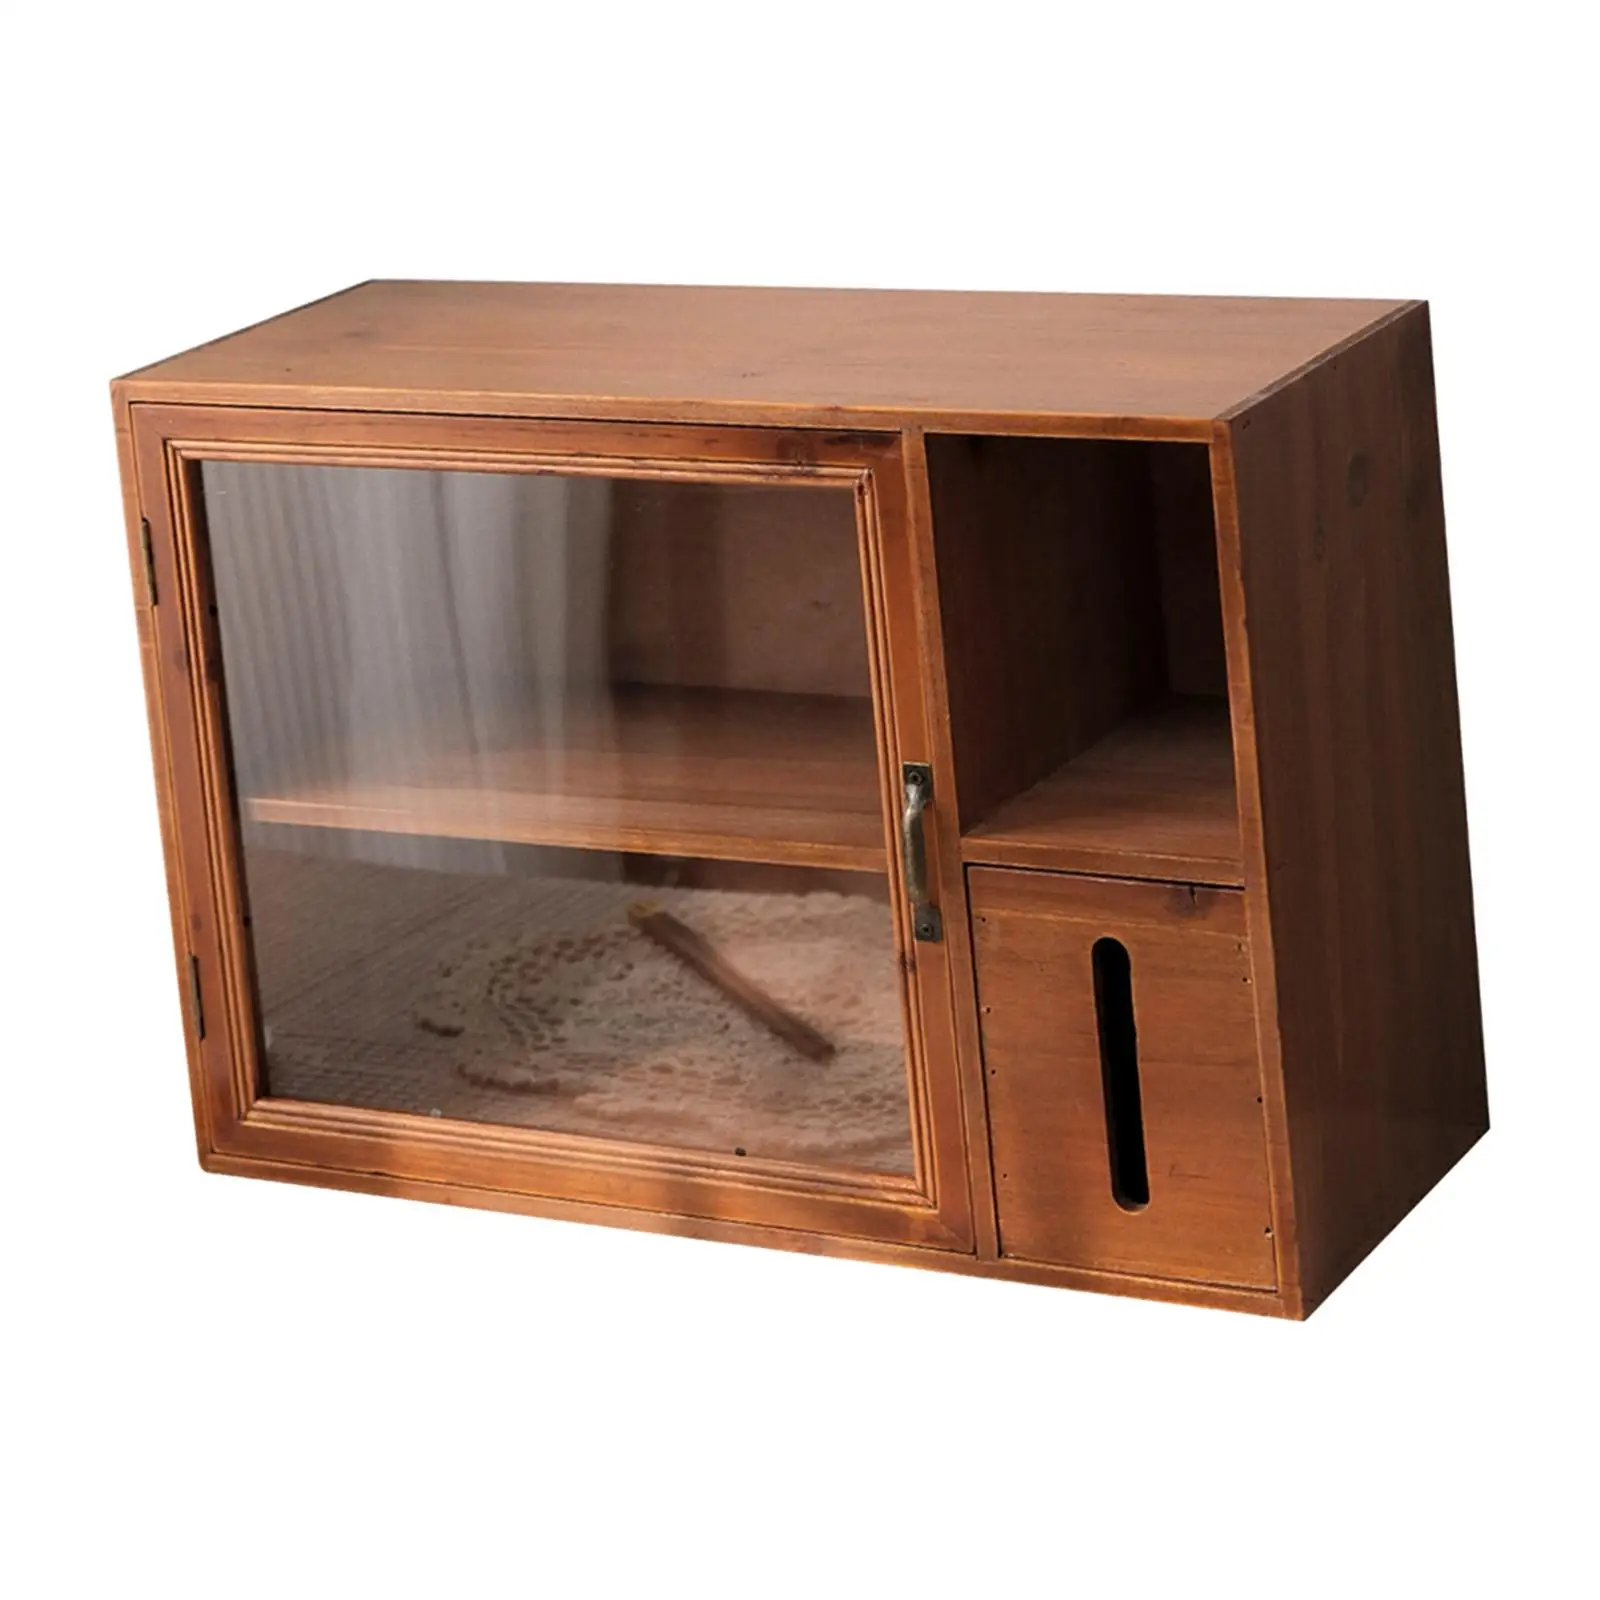 Desk Storage Cabinet with Door Collectibles 2 Tiers Coffee Cup Storage Organizer for Dining Room Vanity Bathroom Dorm Countertop